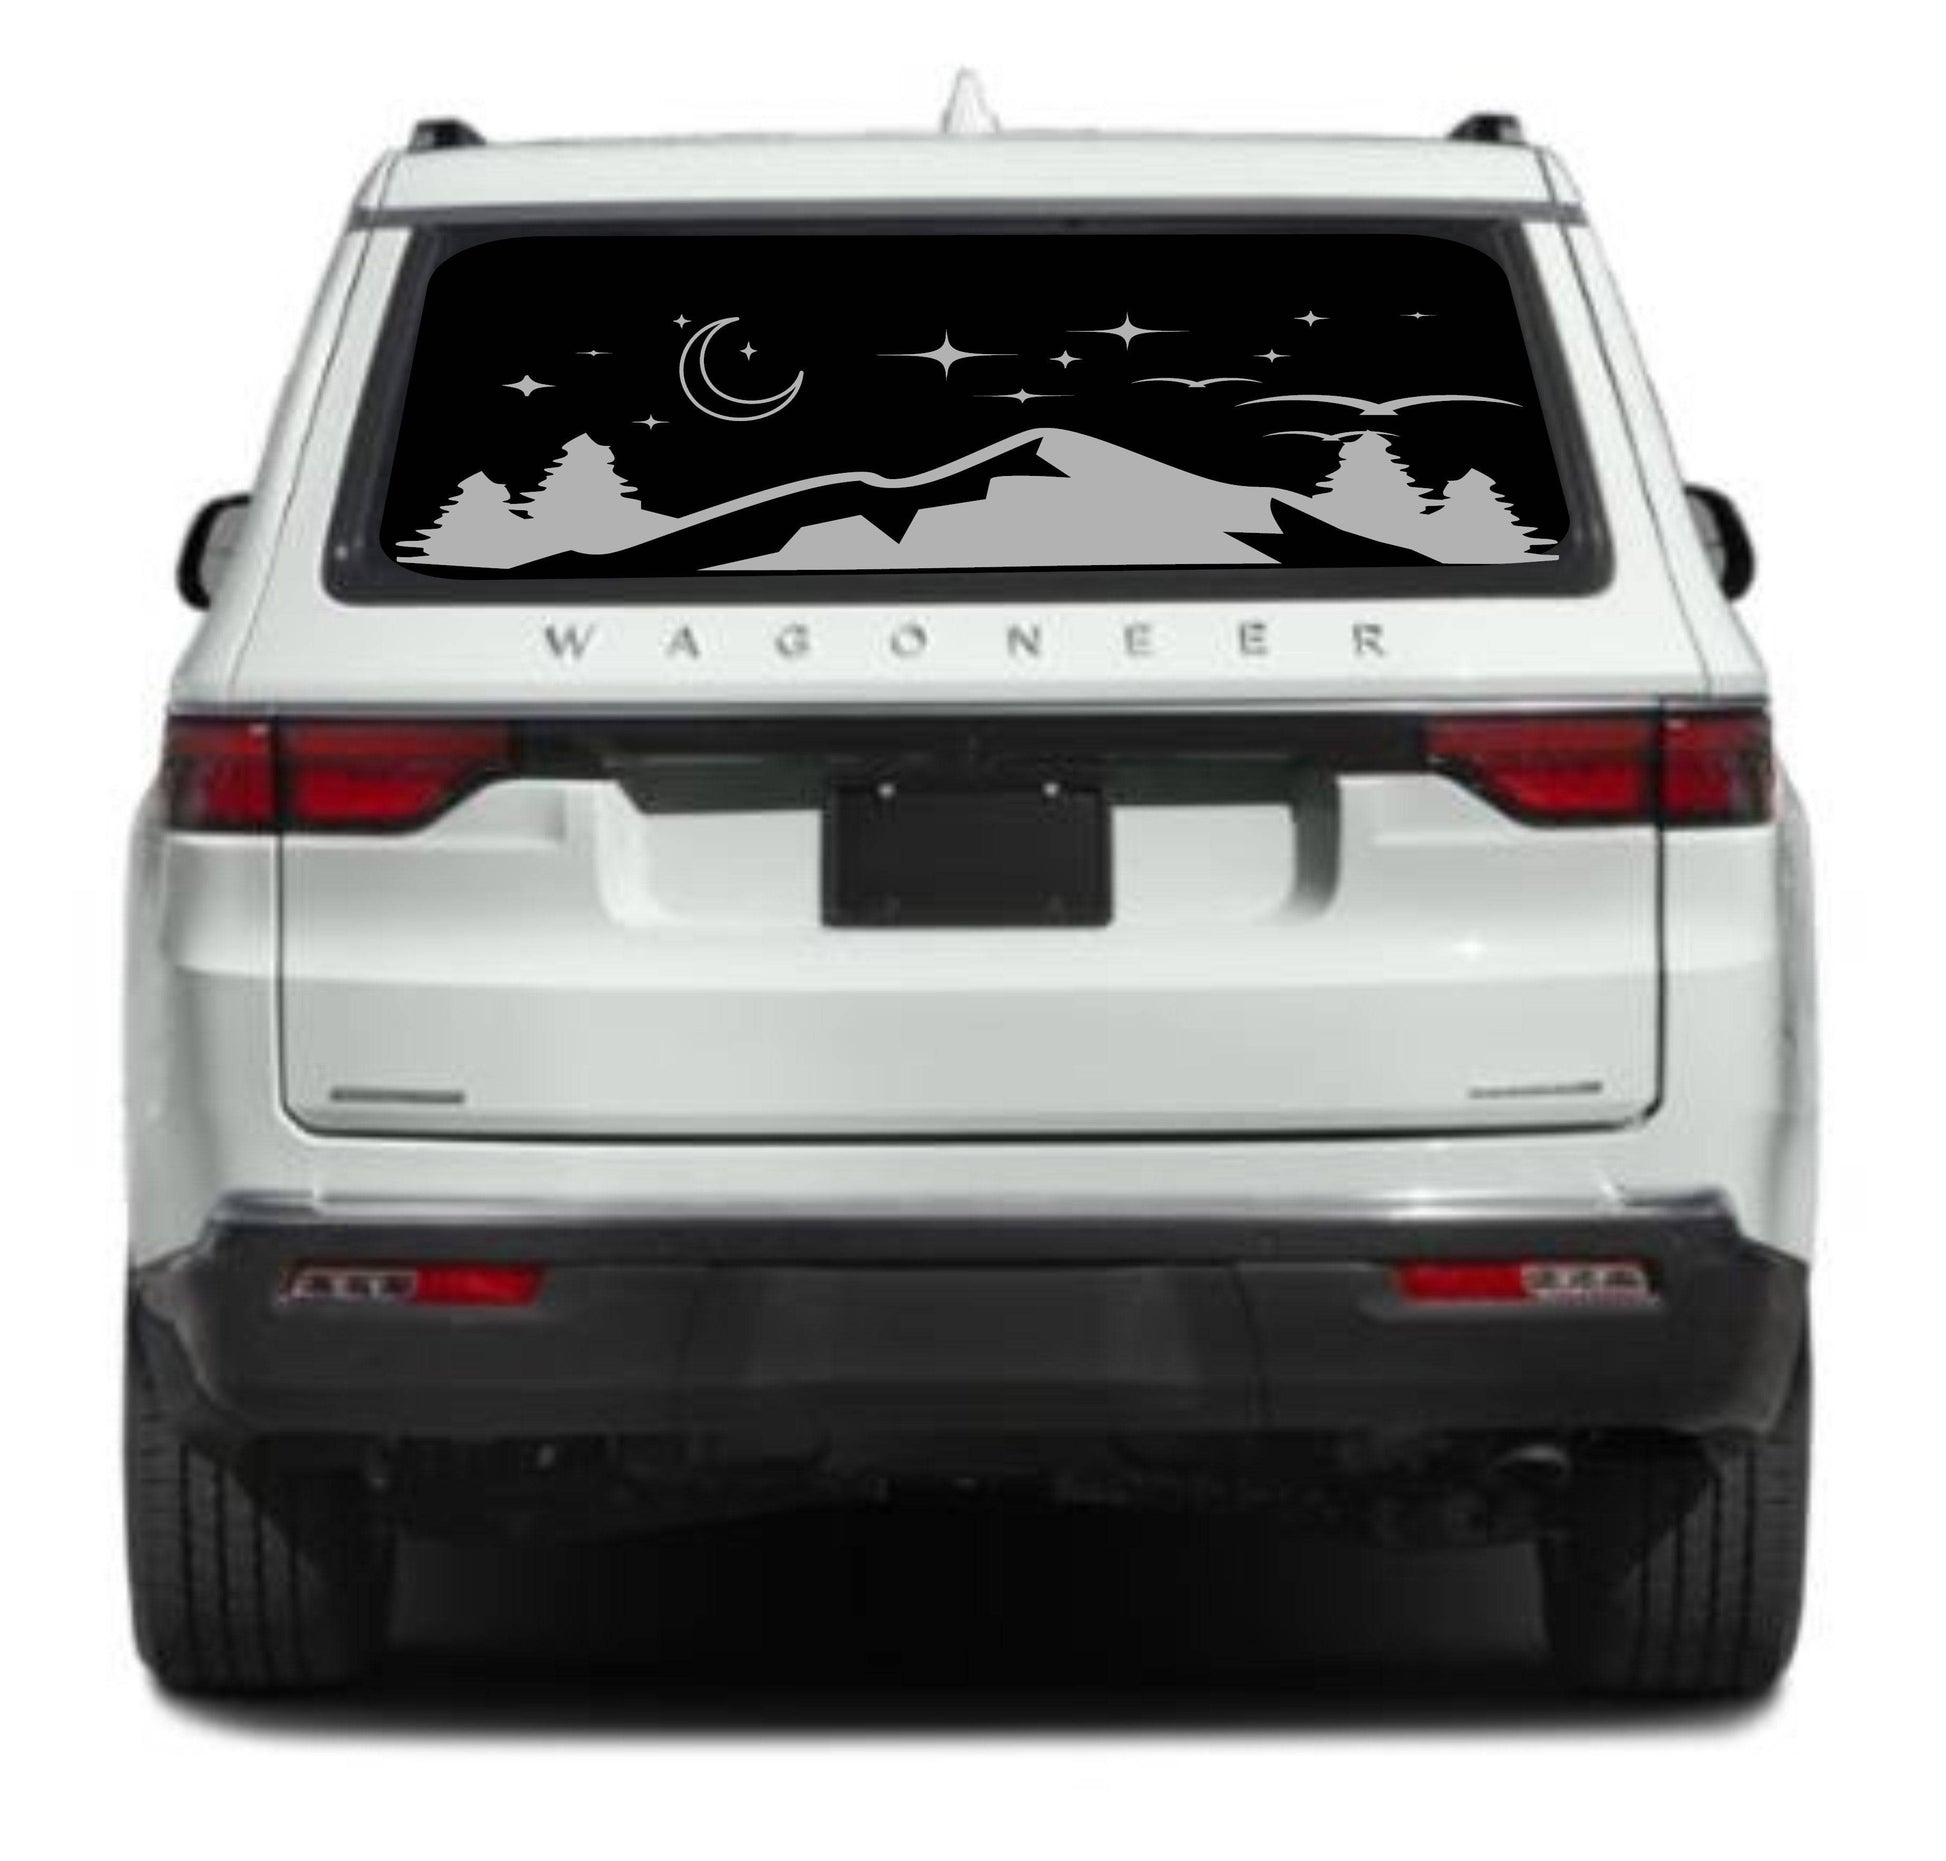 Mountain Silhouette Vinyl Decal for Jeep Wagoneer's Rear Window